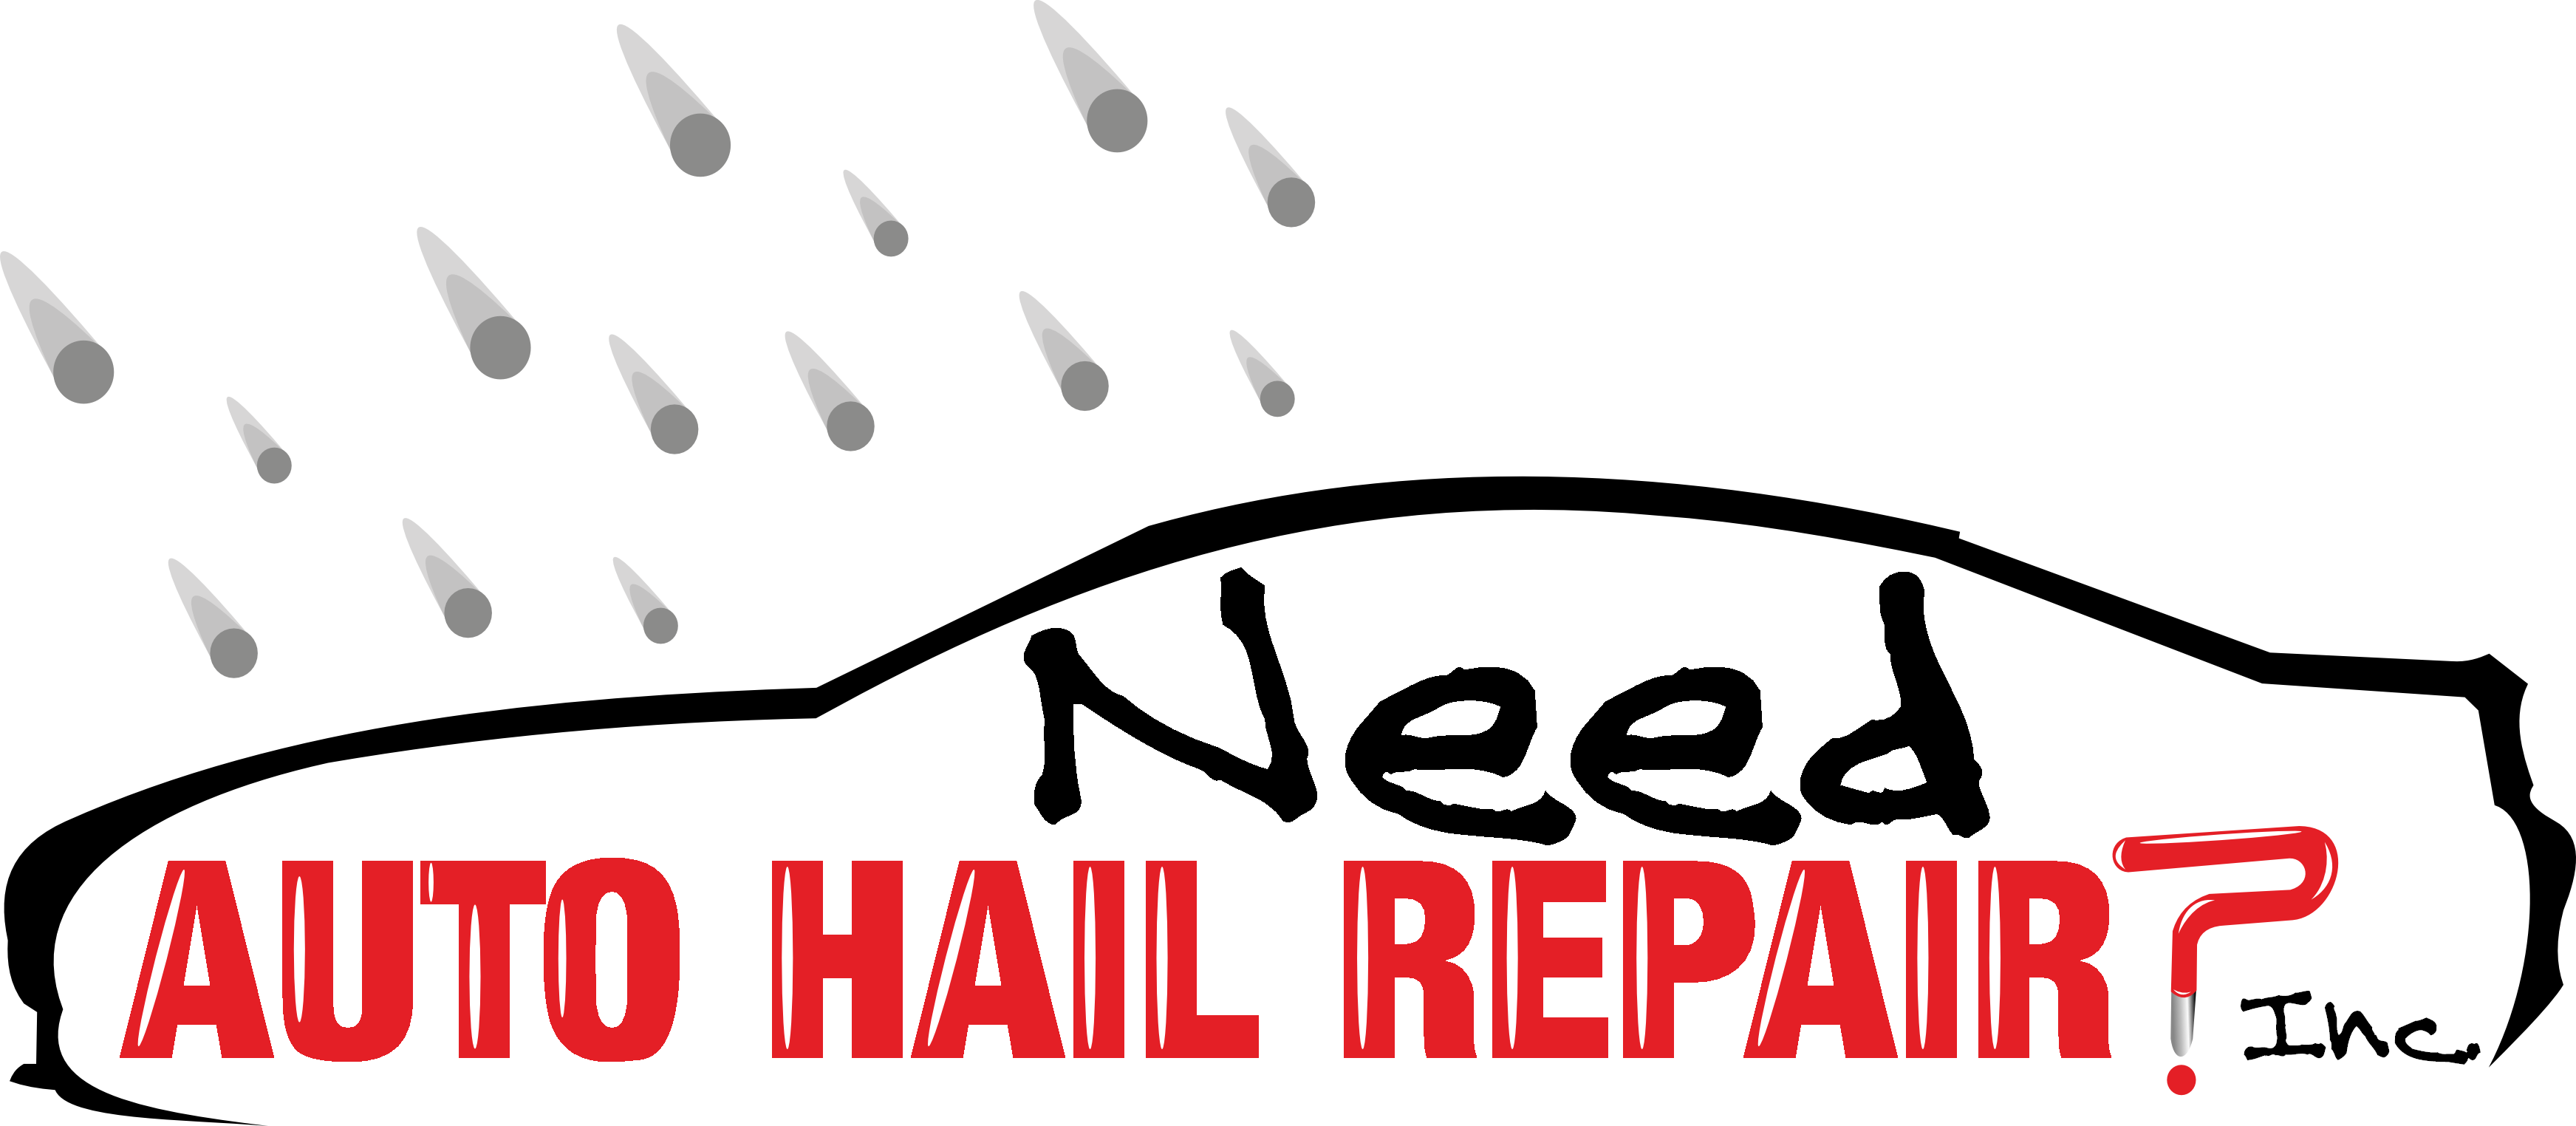 Need Auto Hail Repair - Paintless Dent Repair Logo (3487x1524)